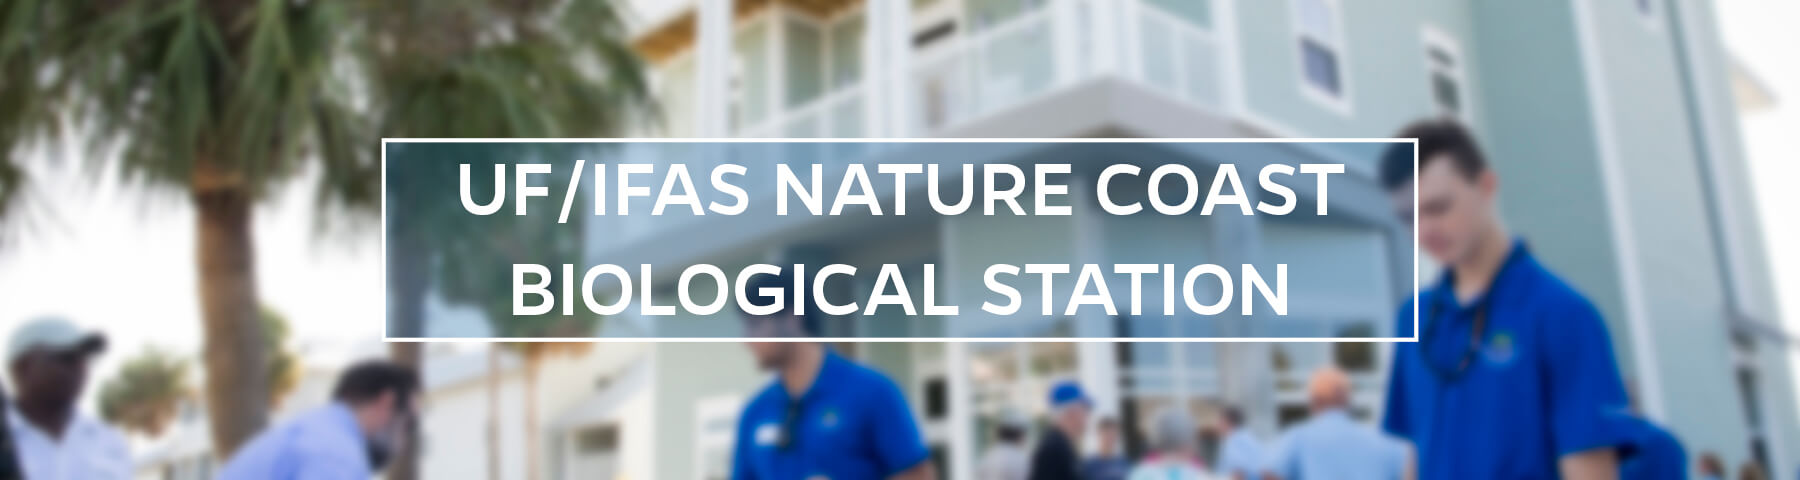 UF/IFAS Nature Coast Biological Station